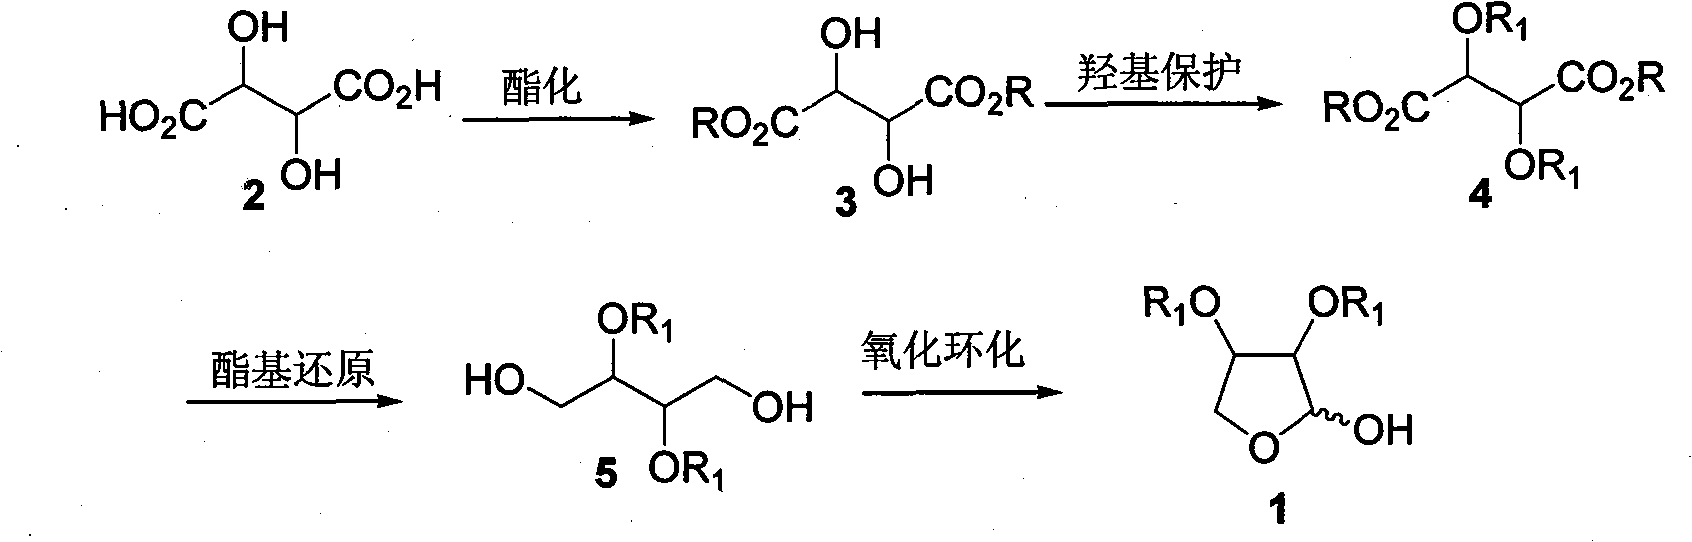 Method for preparing optical activity 2,3-dihydroxy teinai hemiacetal derivant